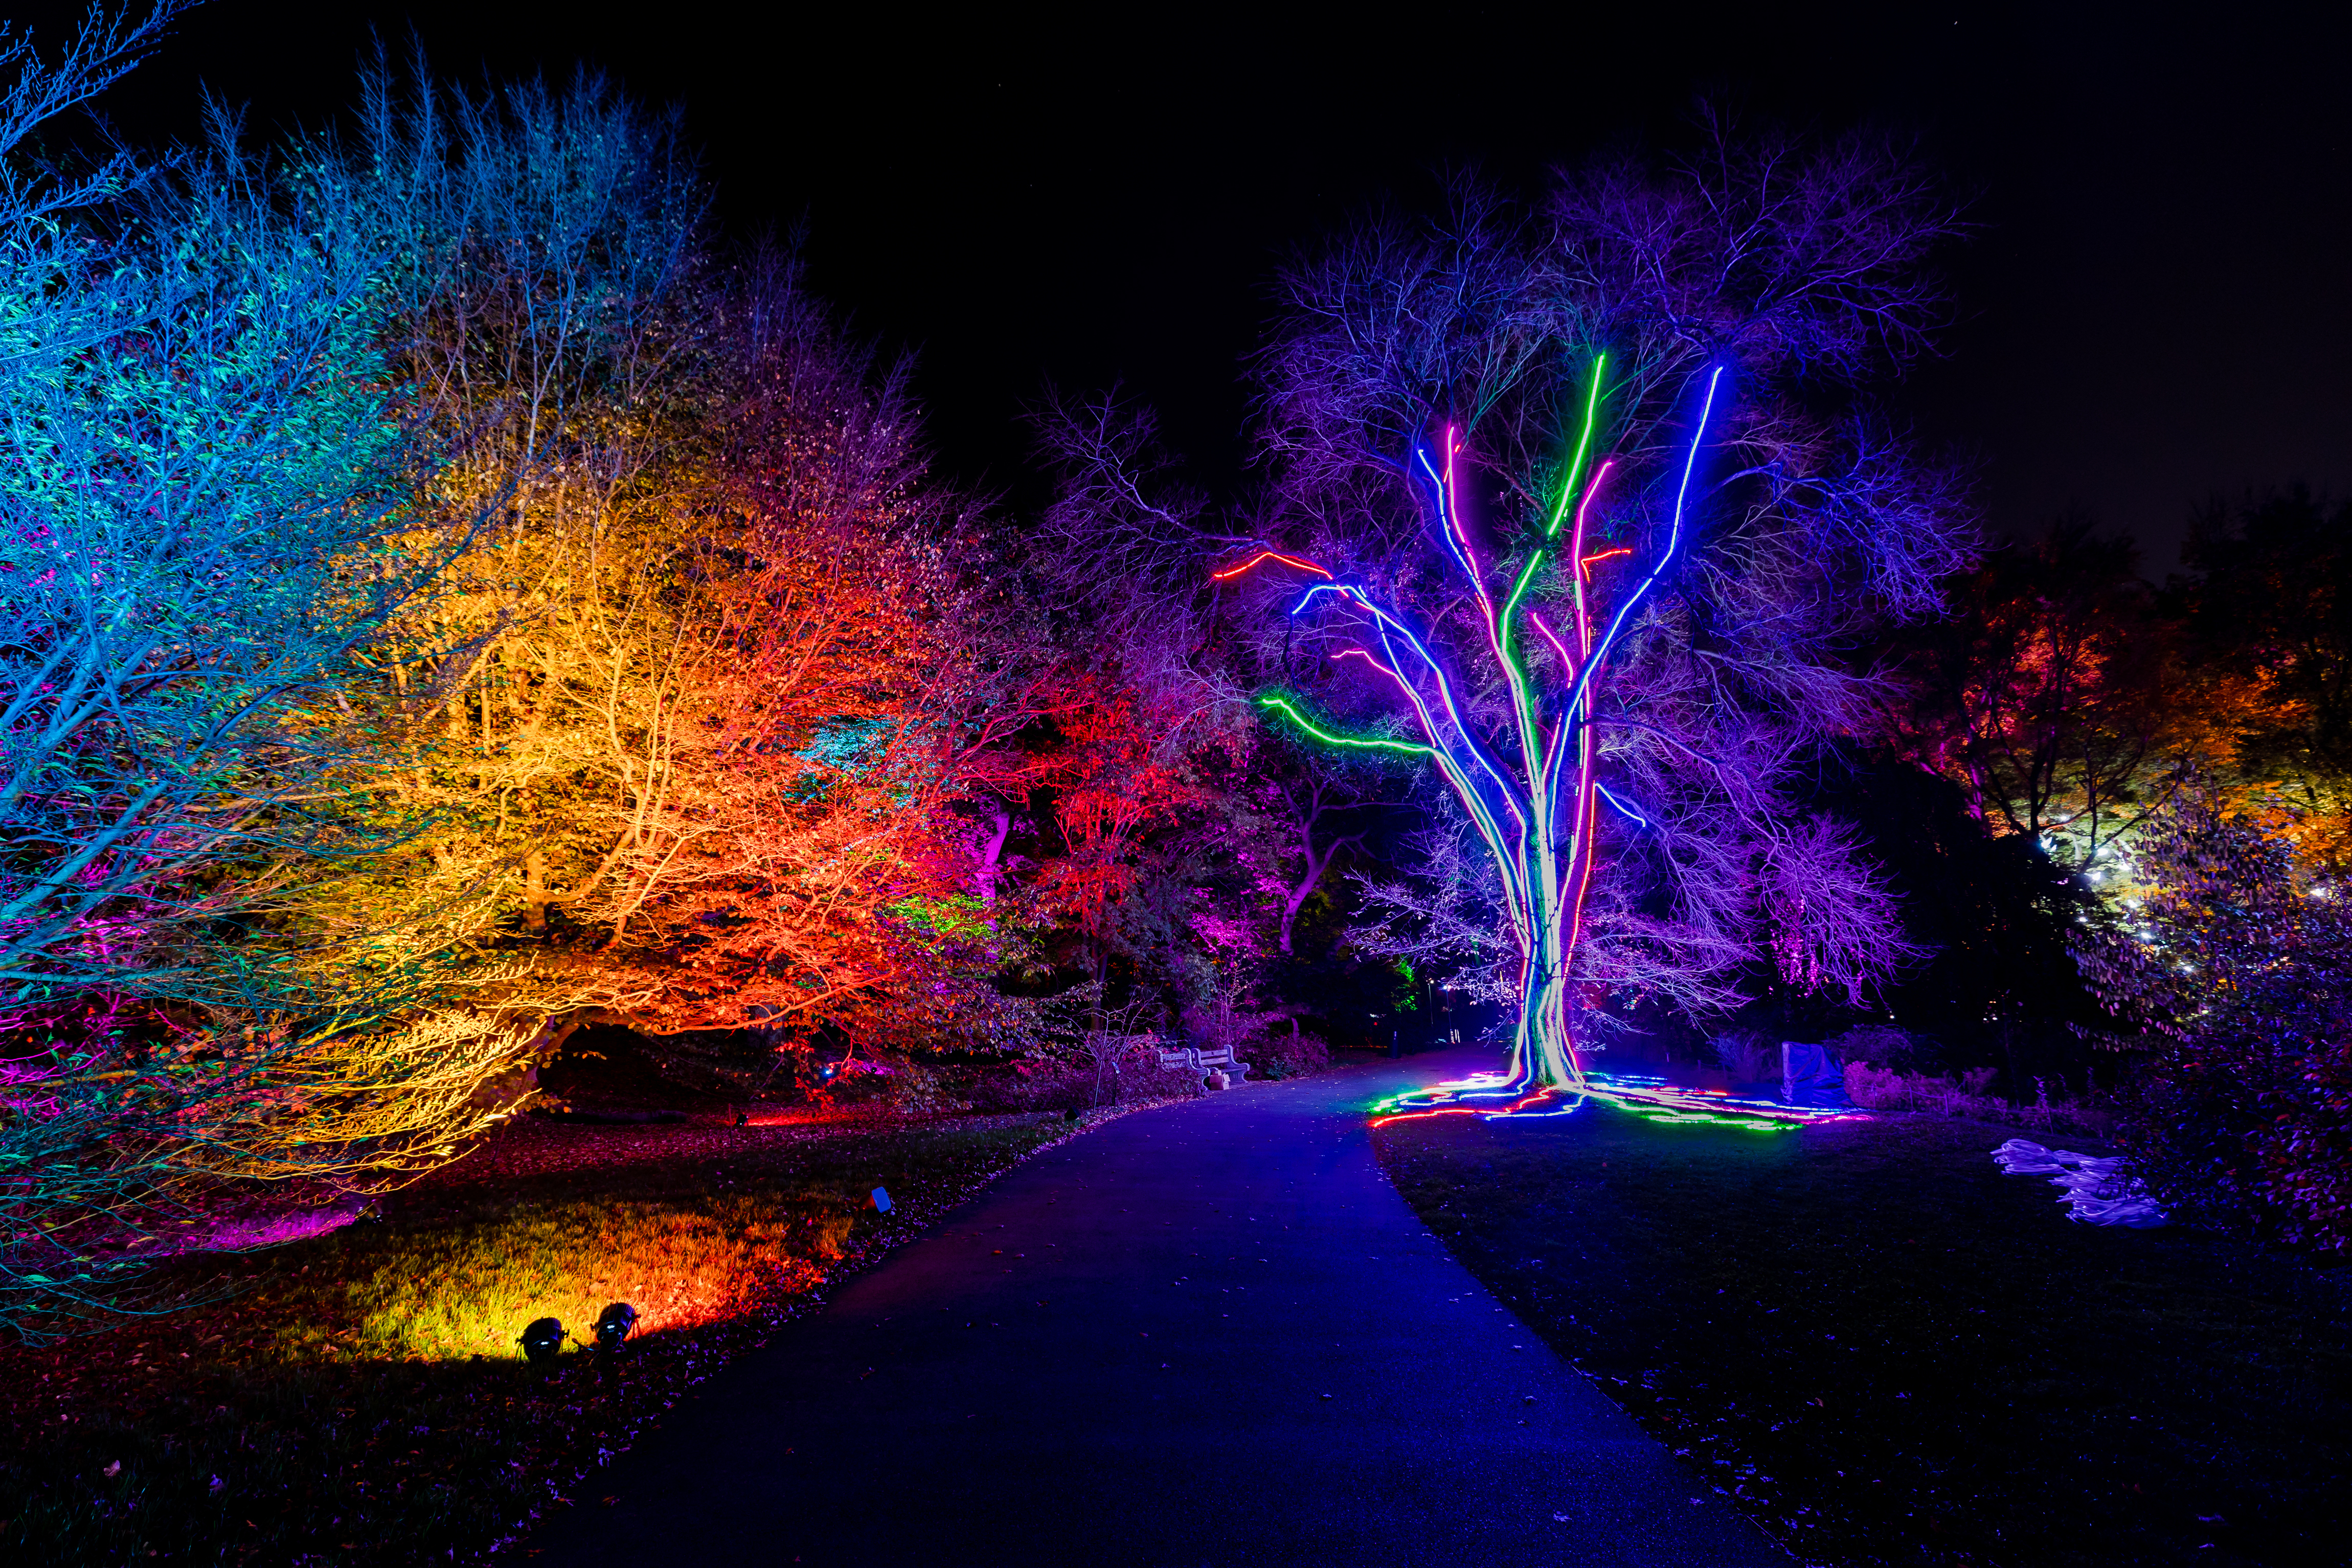 A tree illuminated with LED light panels.